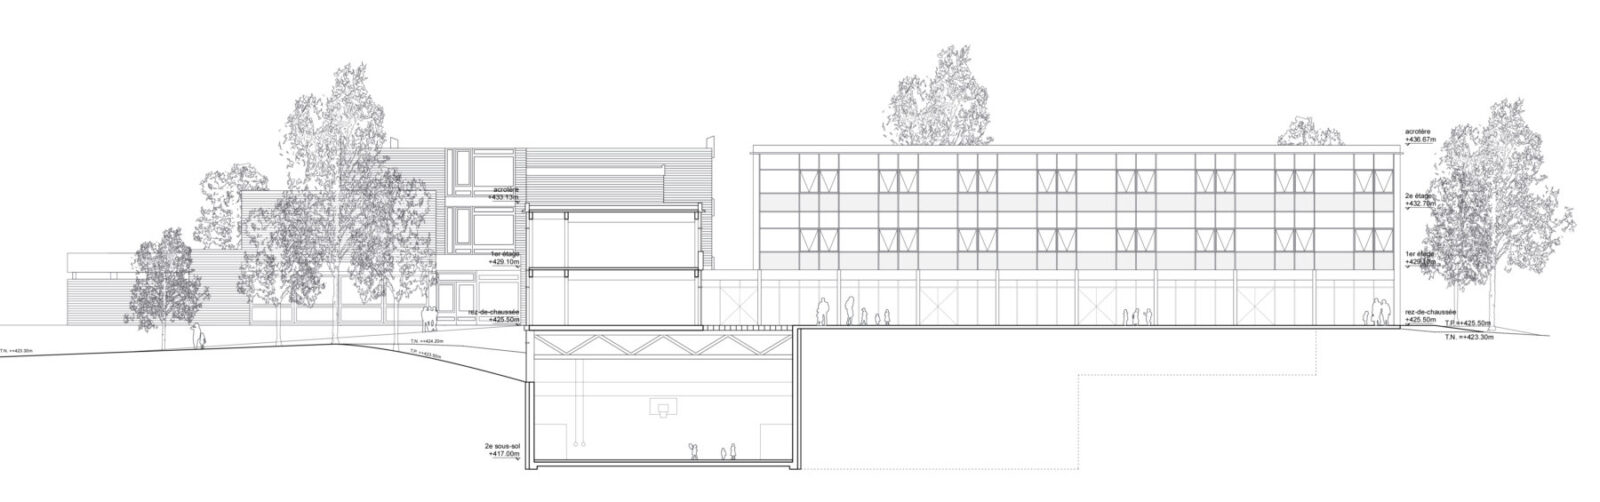 Archisearch Extension of Belvedere school in Geneva | by Sujets Objets